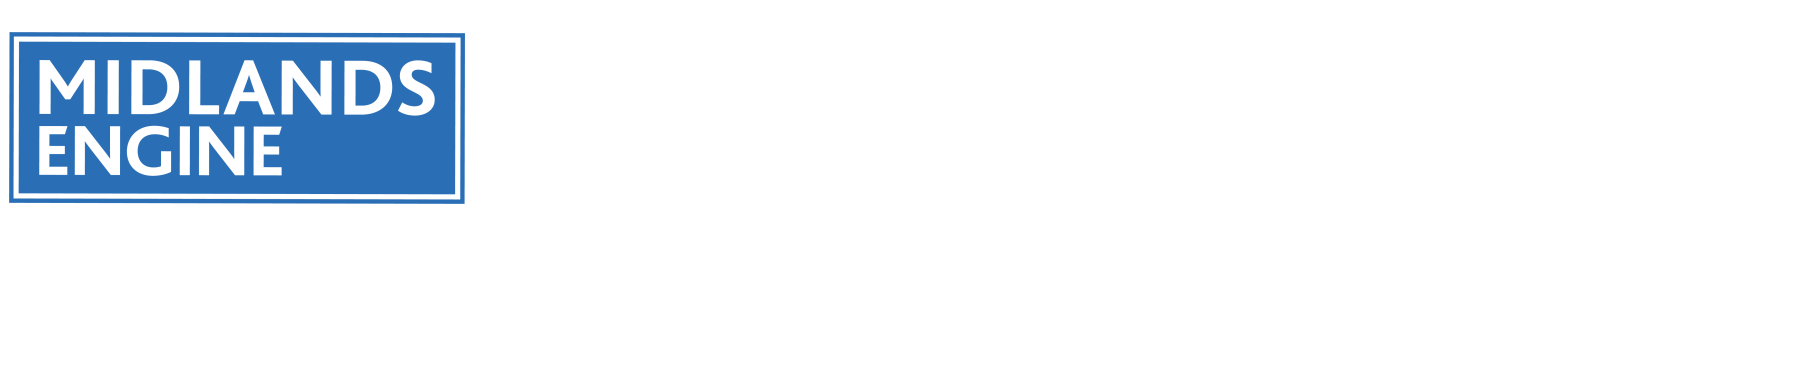 Midlands-Engine-Investment-Portfolio-logo